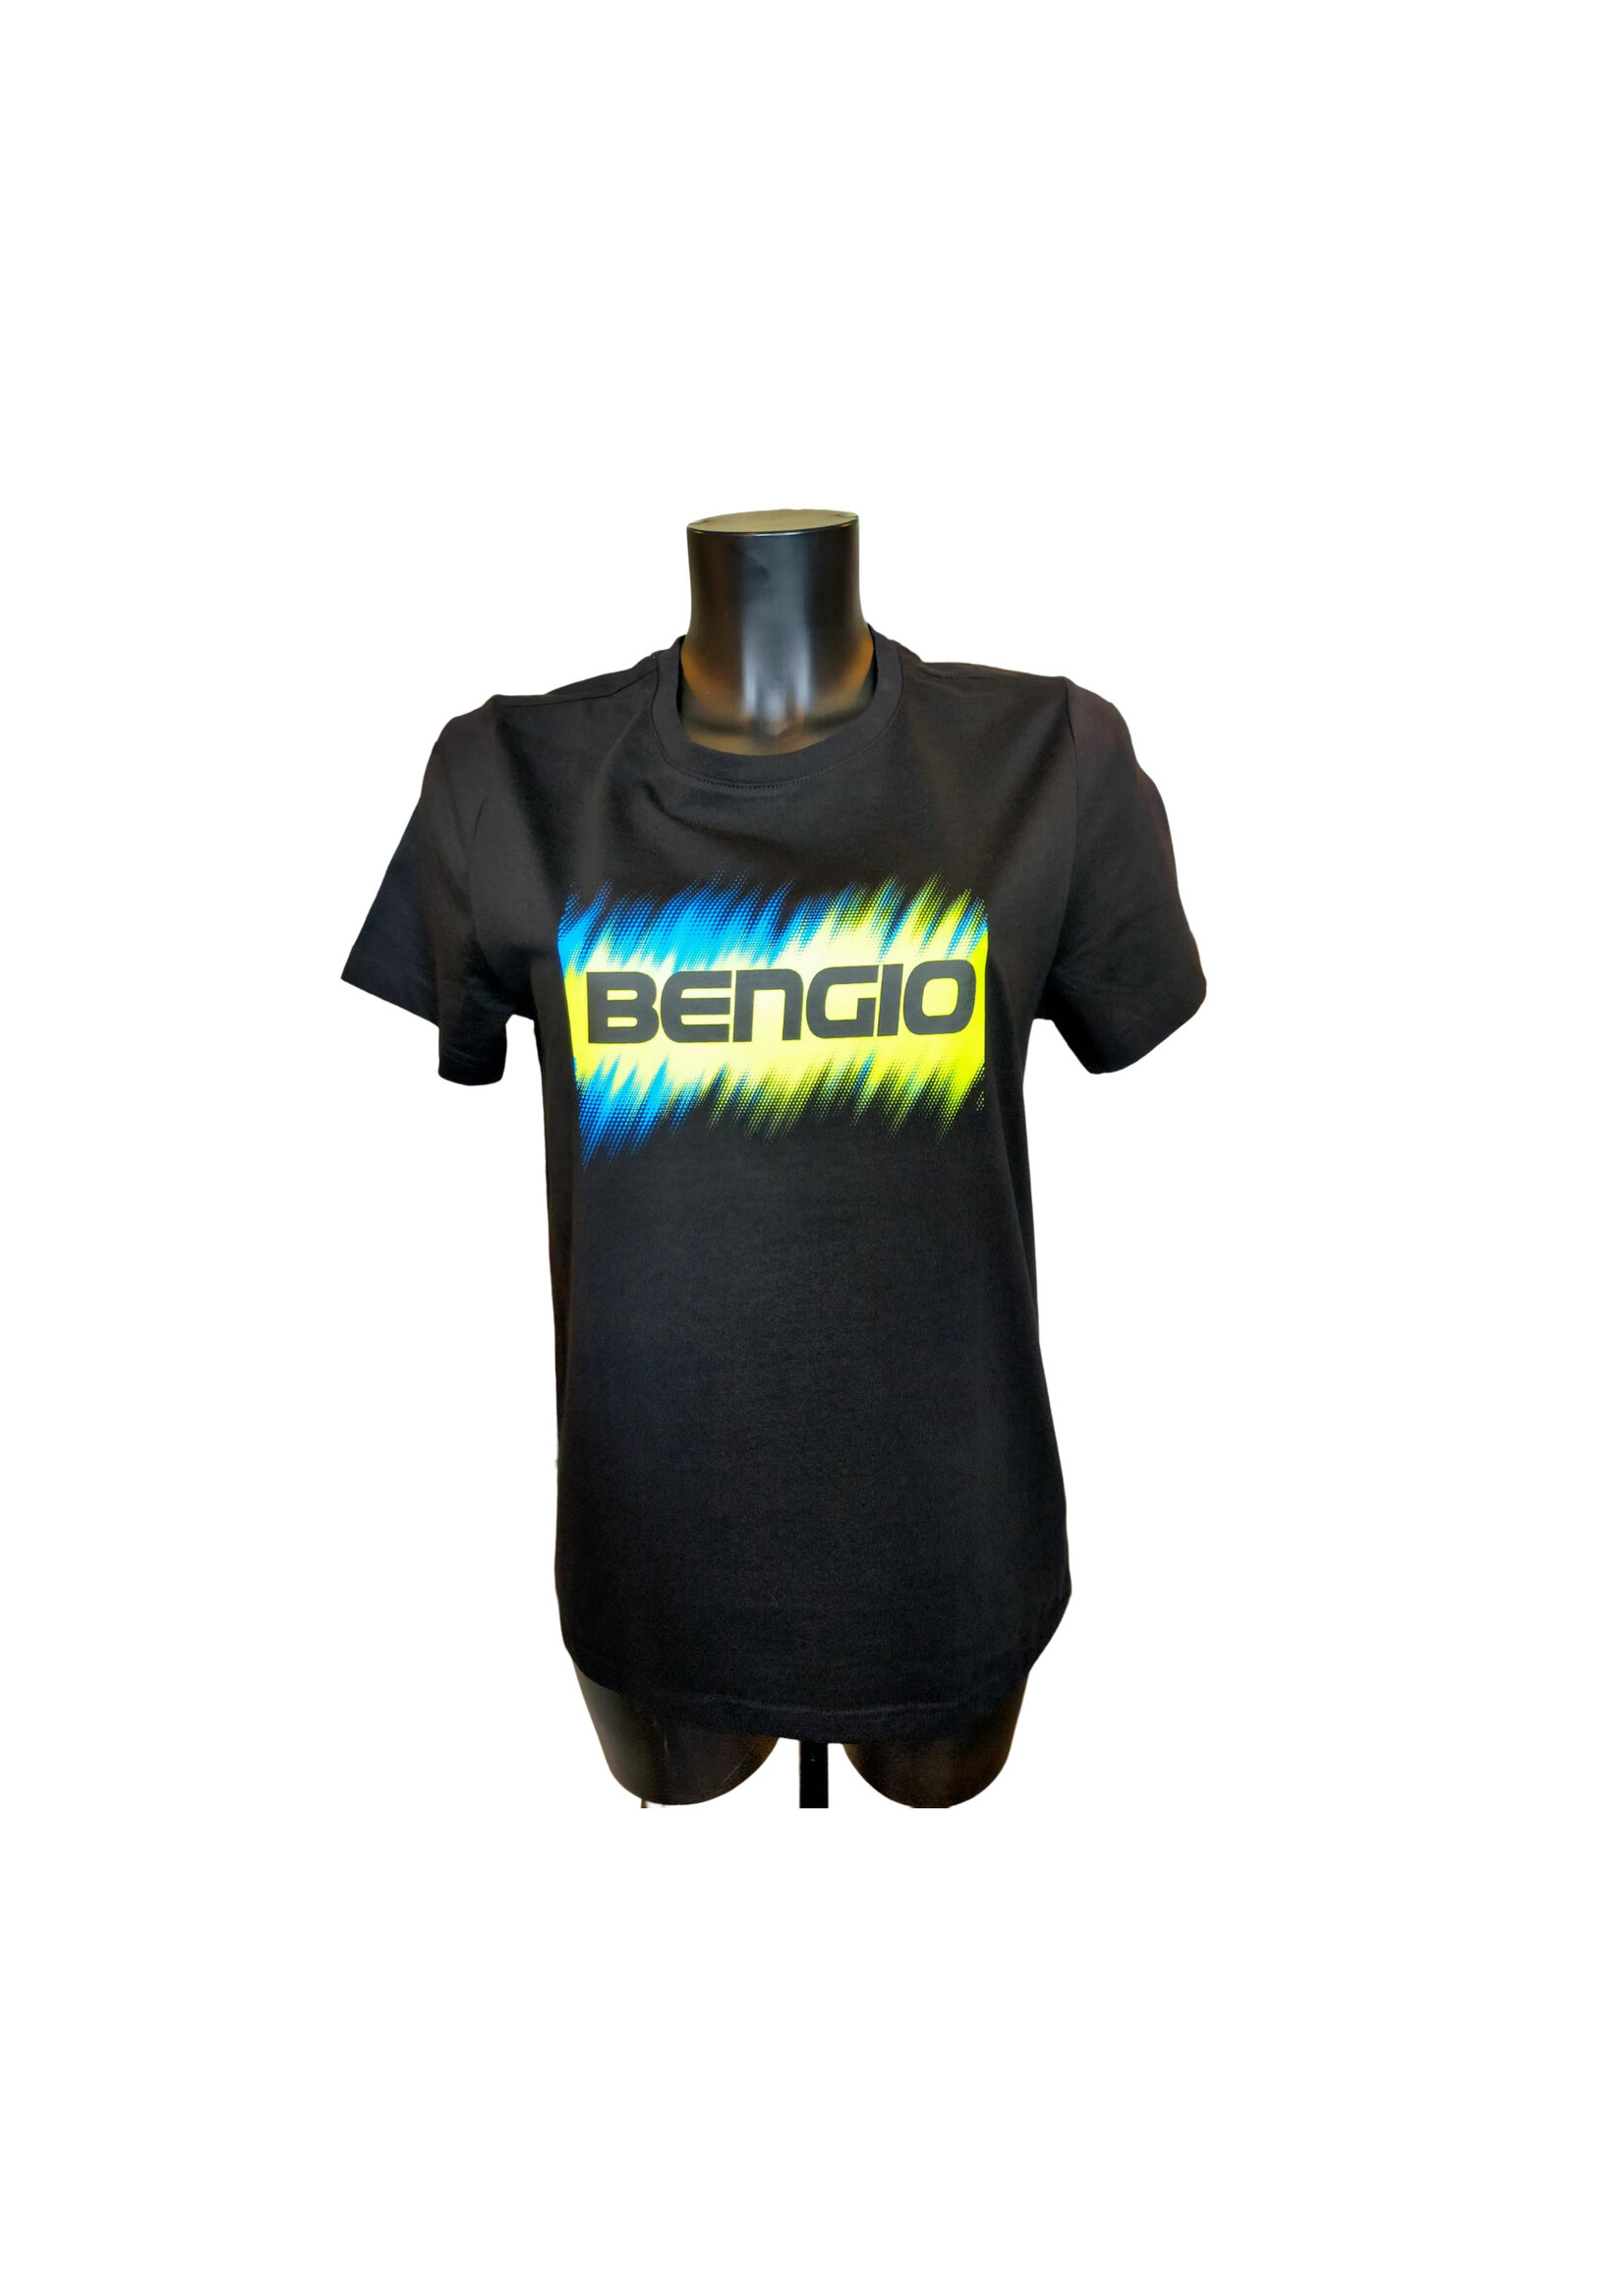 Bengio Bengio T-Shirt Schwarz/Gelb/Blau